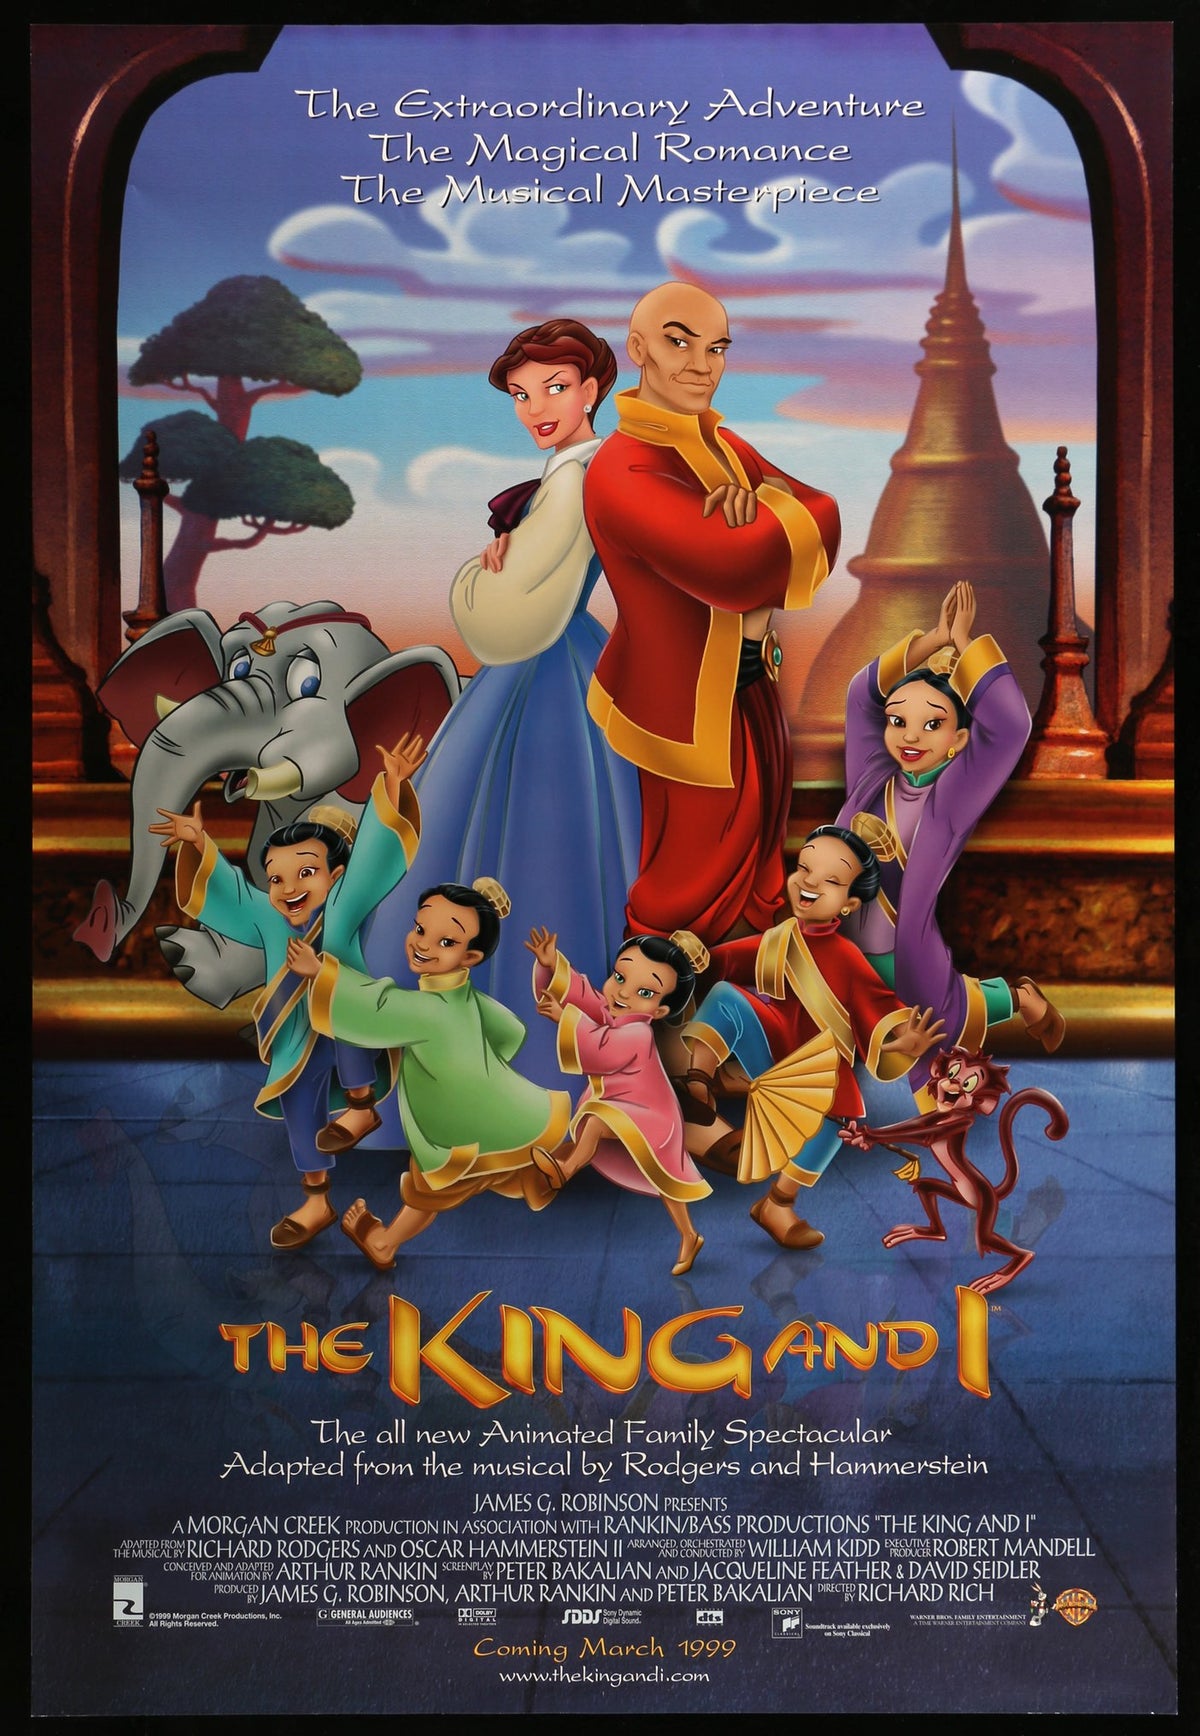 King and I (1999) original movie poster for sale at Original Film Art